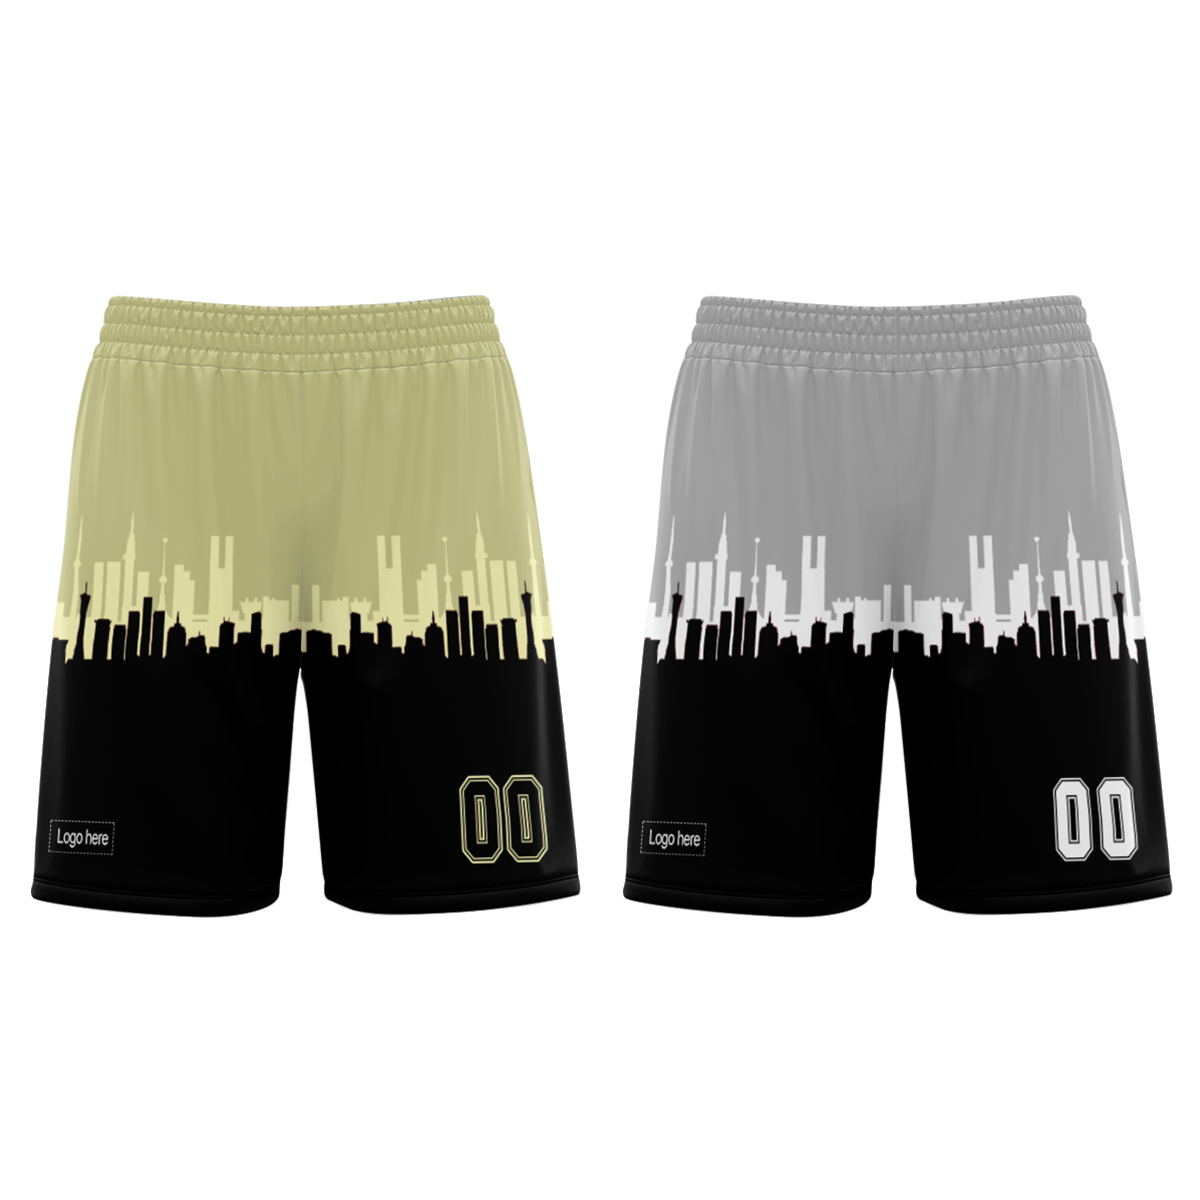 customized-sublimation-printing-basketball-uniforms-design-competitive-basketball-team-jerseys-at-cj-pod-7